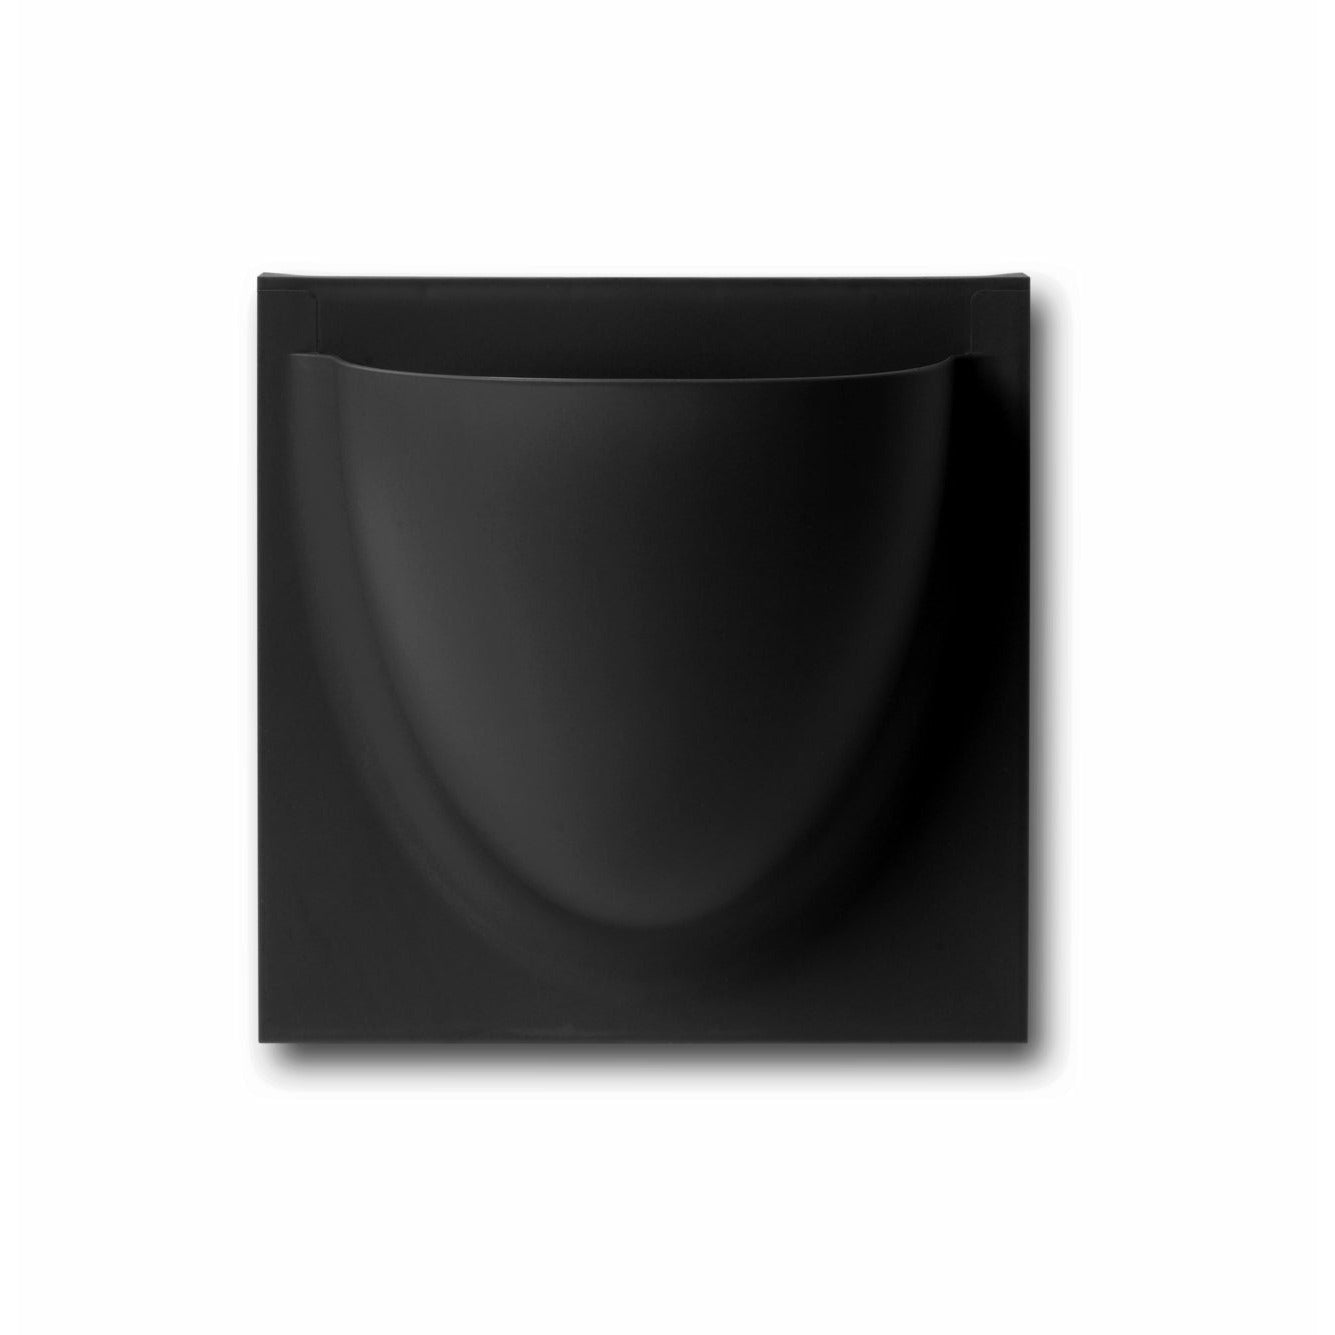 Verti Kööpenhamina - Veriplantit mini musta 15x15x7,5 cm